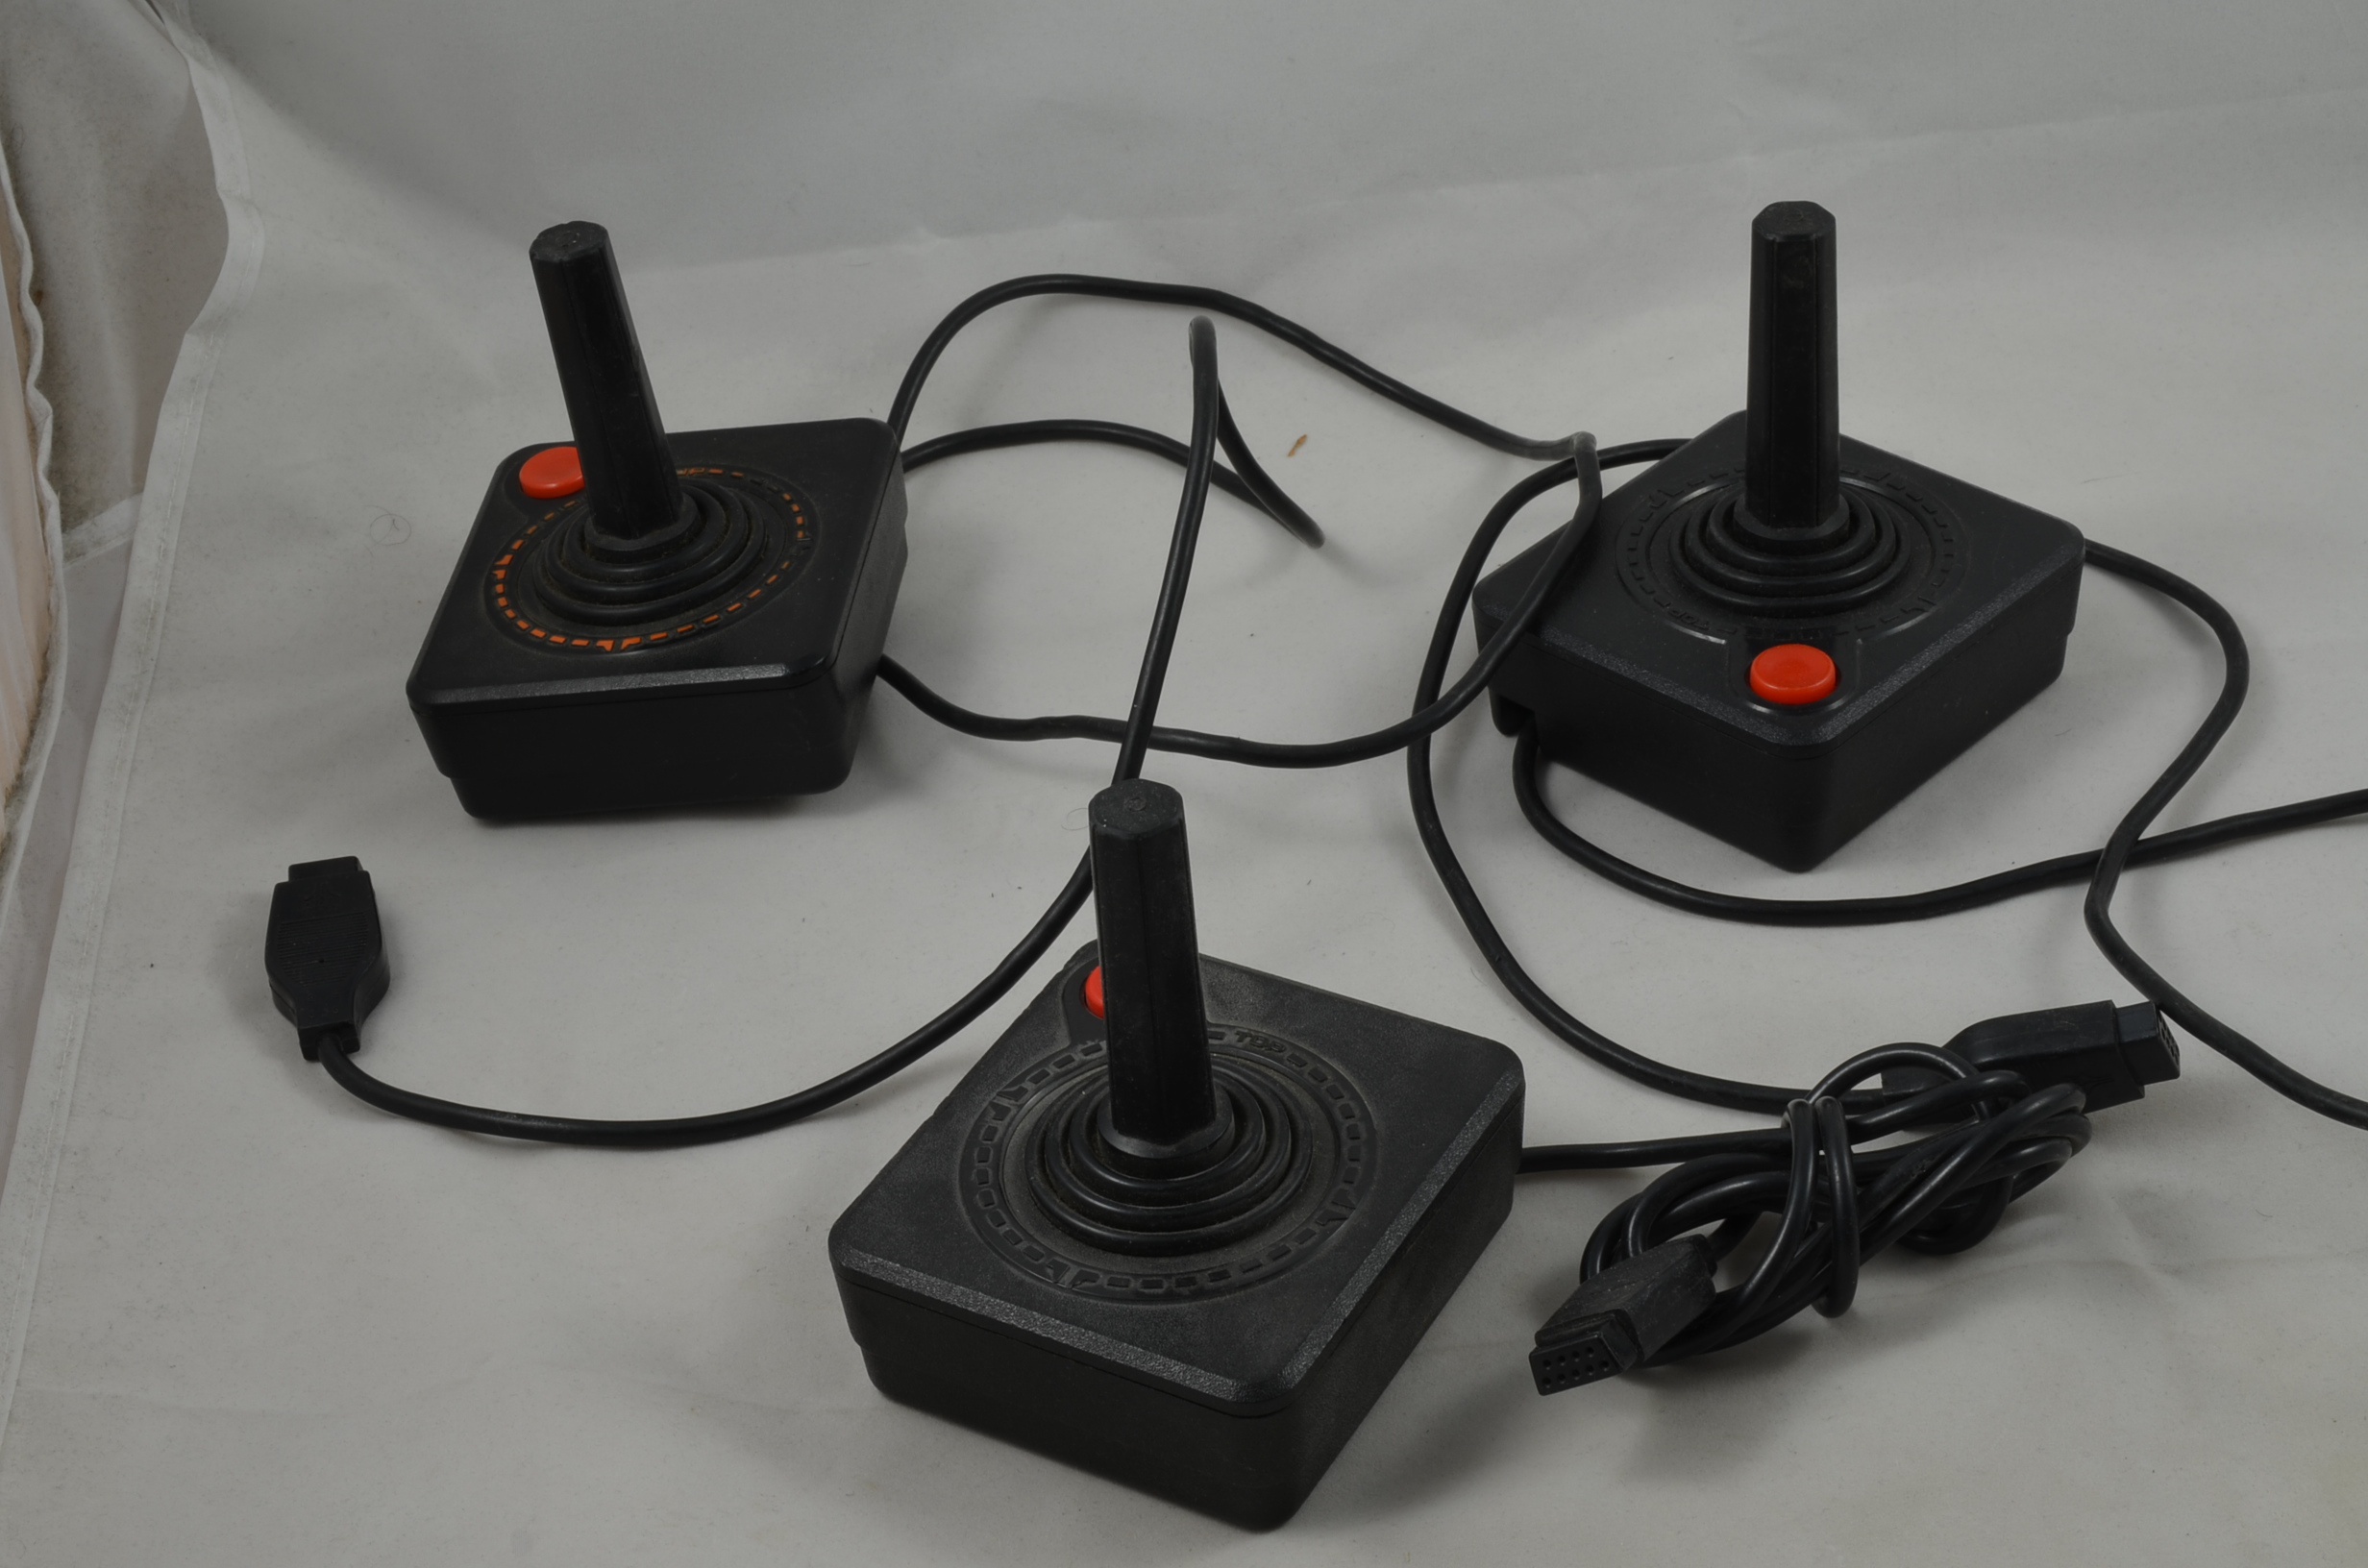 Produktbild von Atari CX40 Joystick Controller